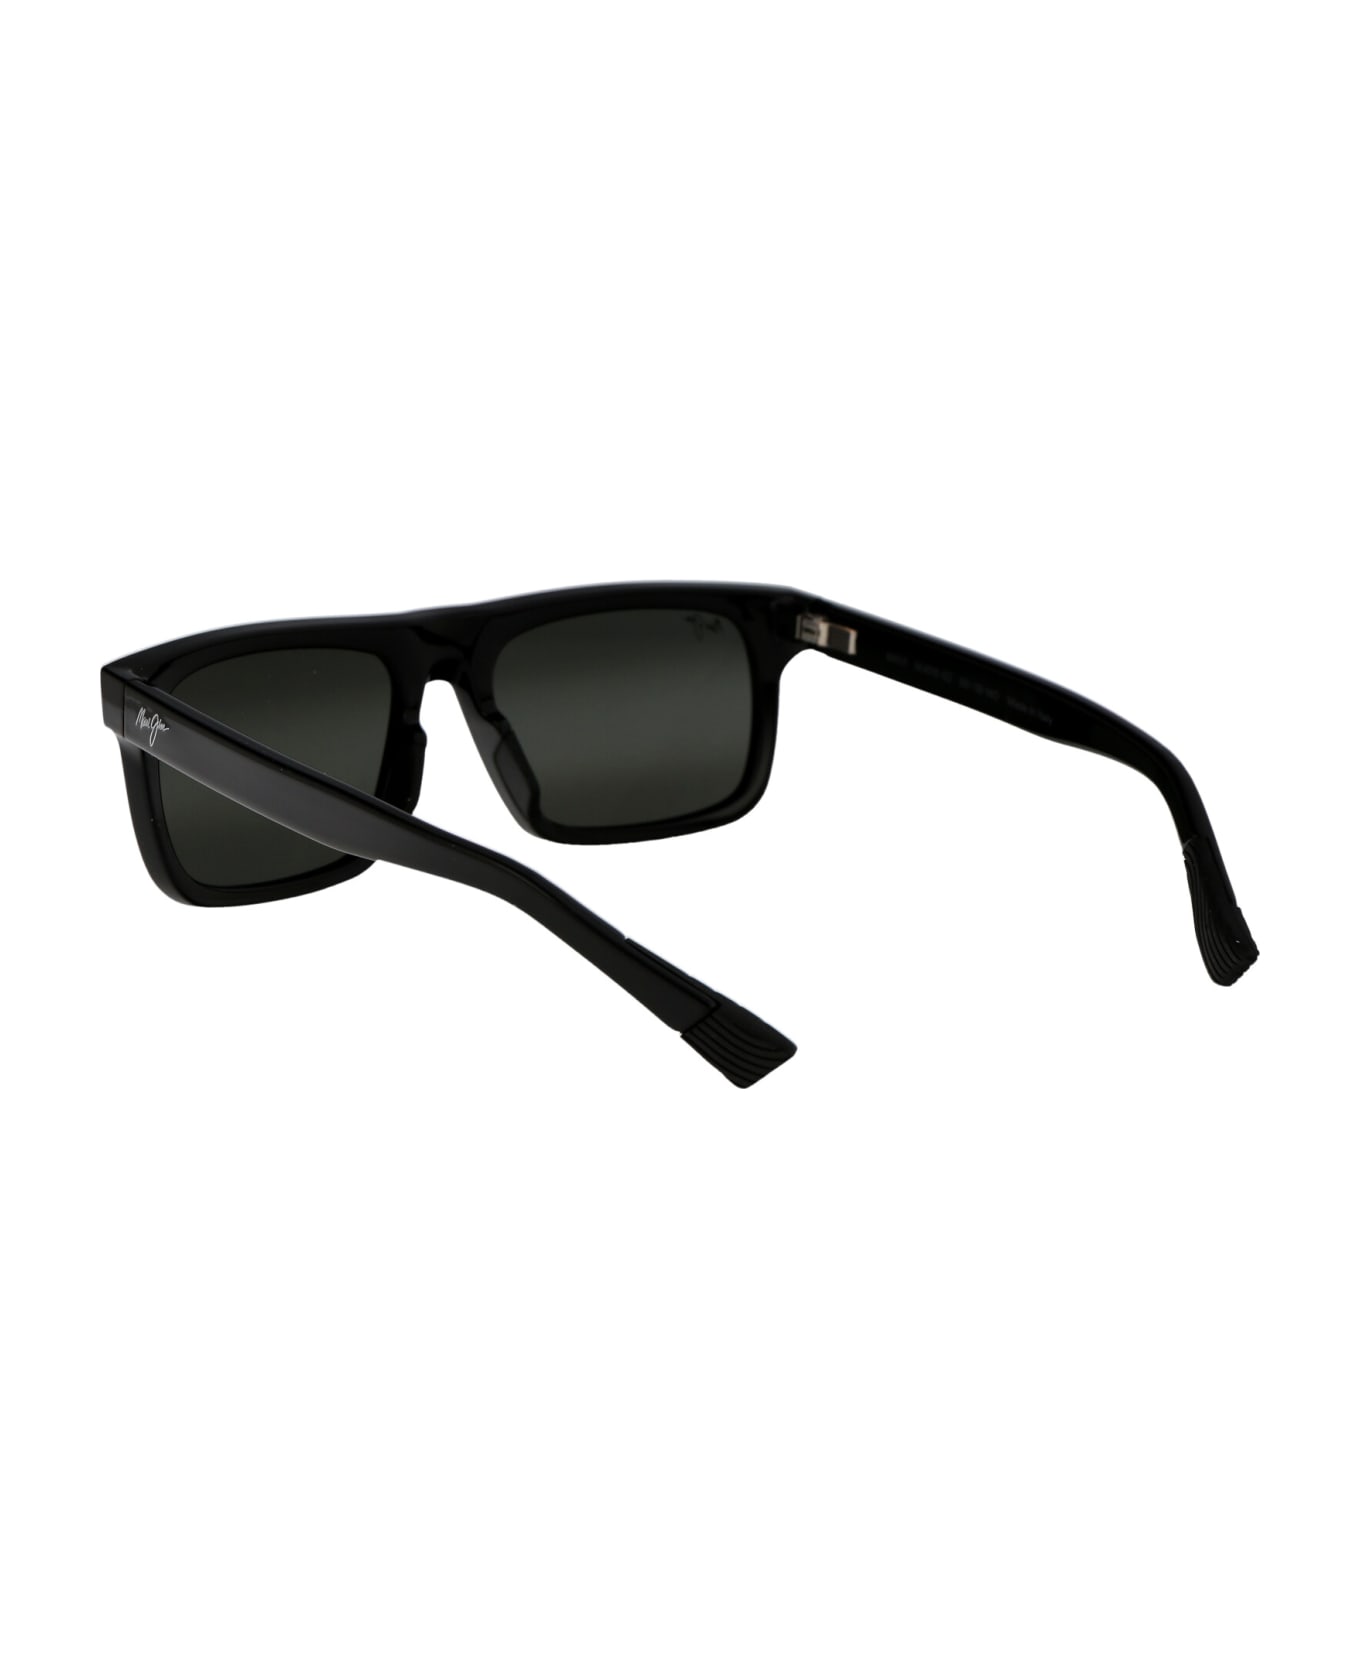 Maui Jim Opio Sunglasses - 002 GREY OPIO SHINY BLACK サングラス